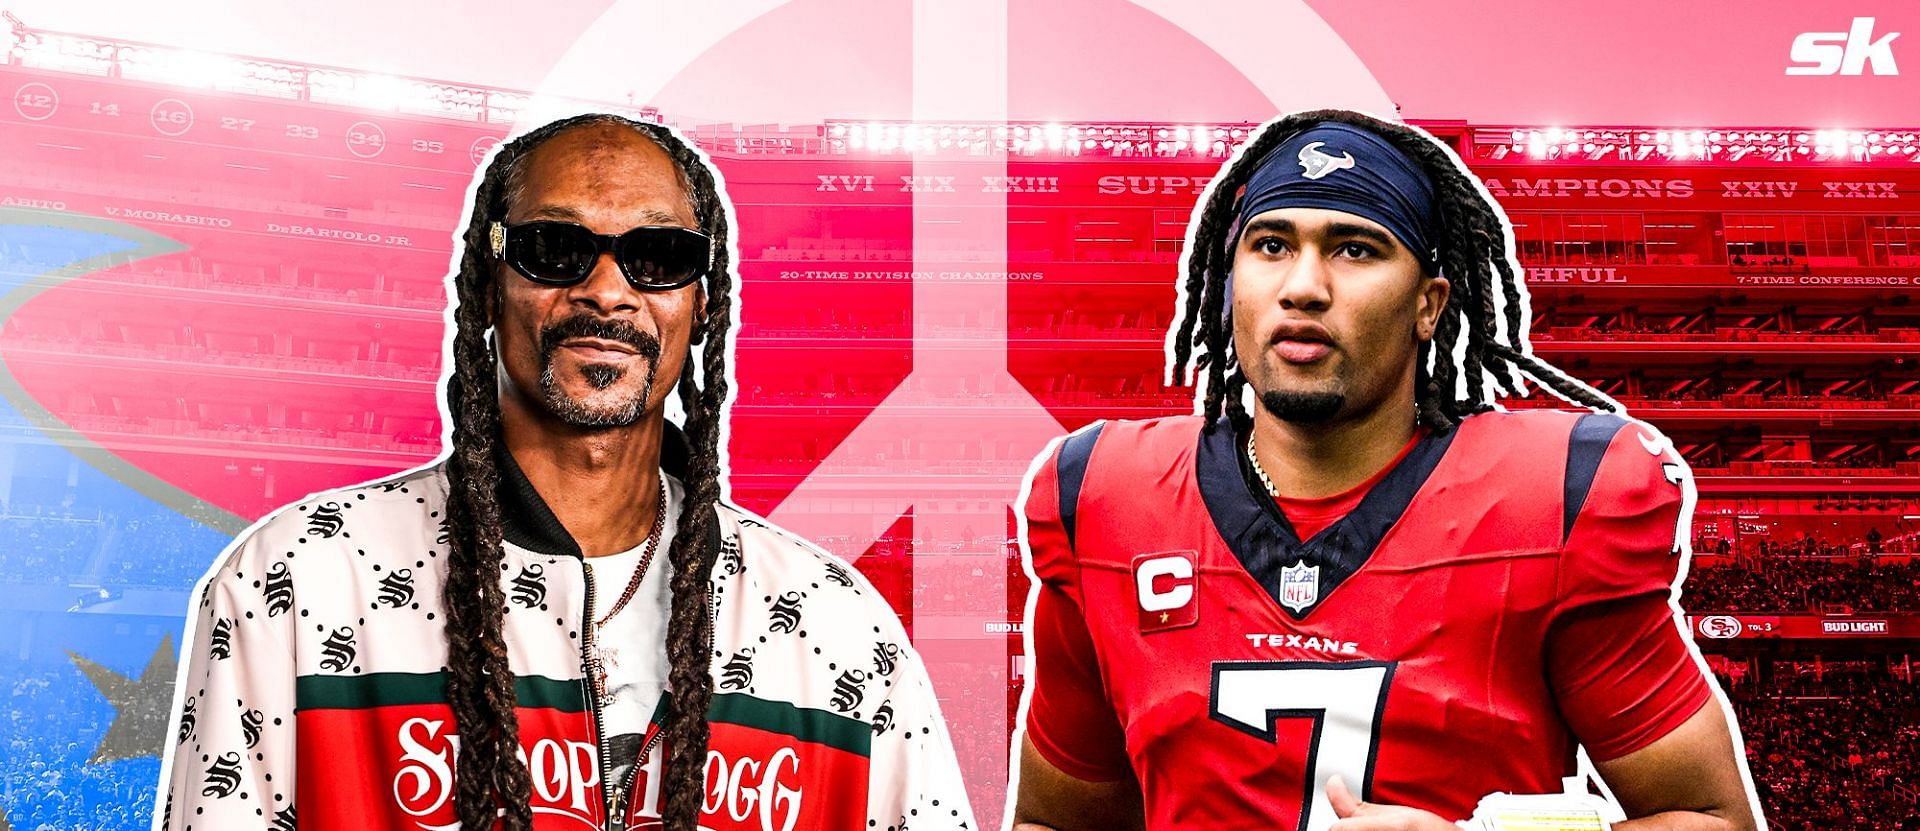 Snoop Dogg, left, CJ Stroud, right. 